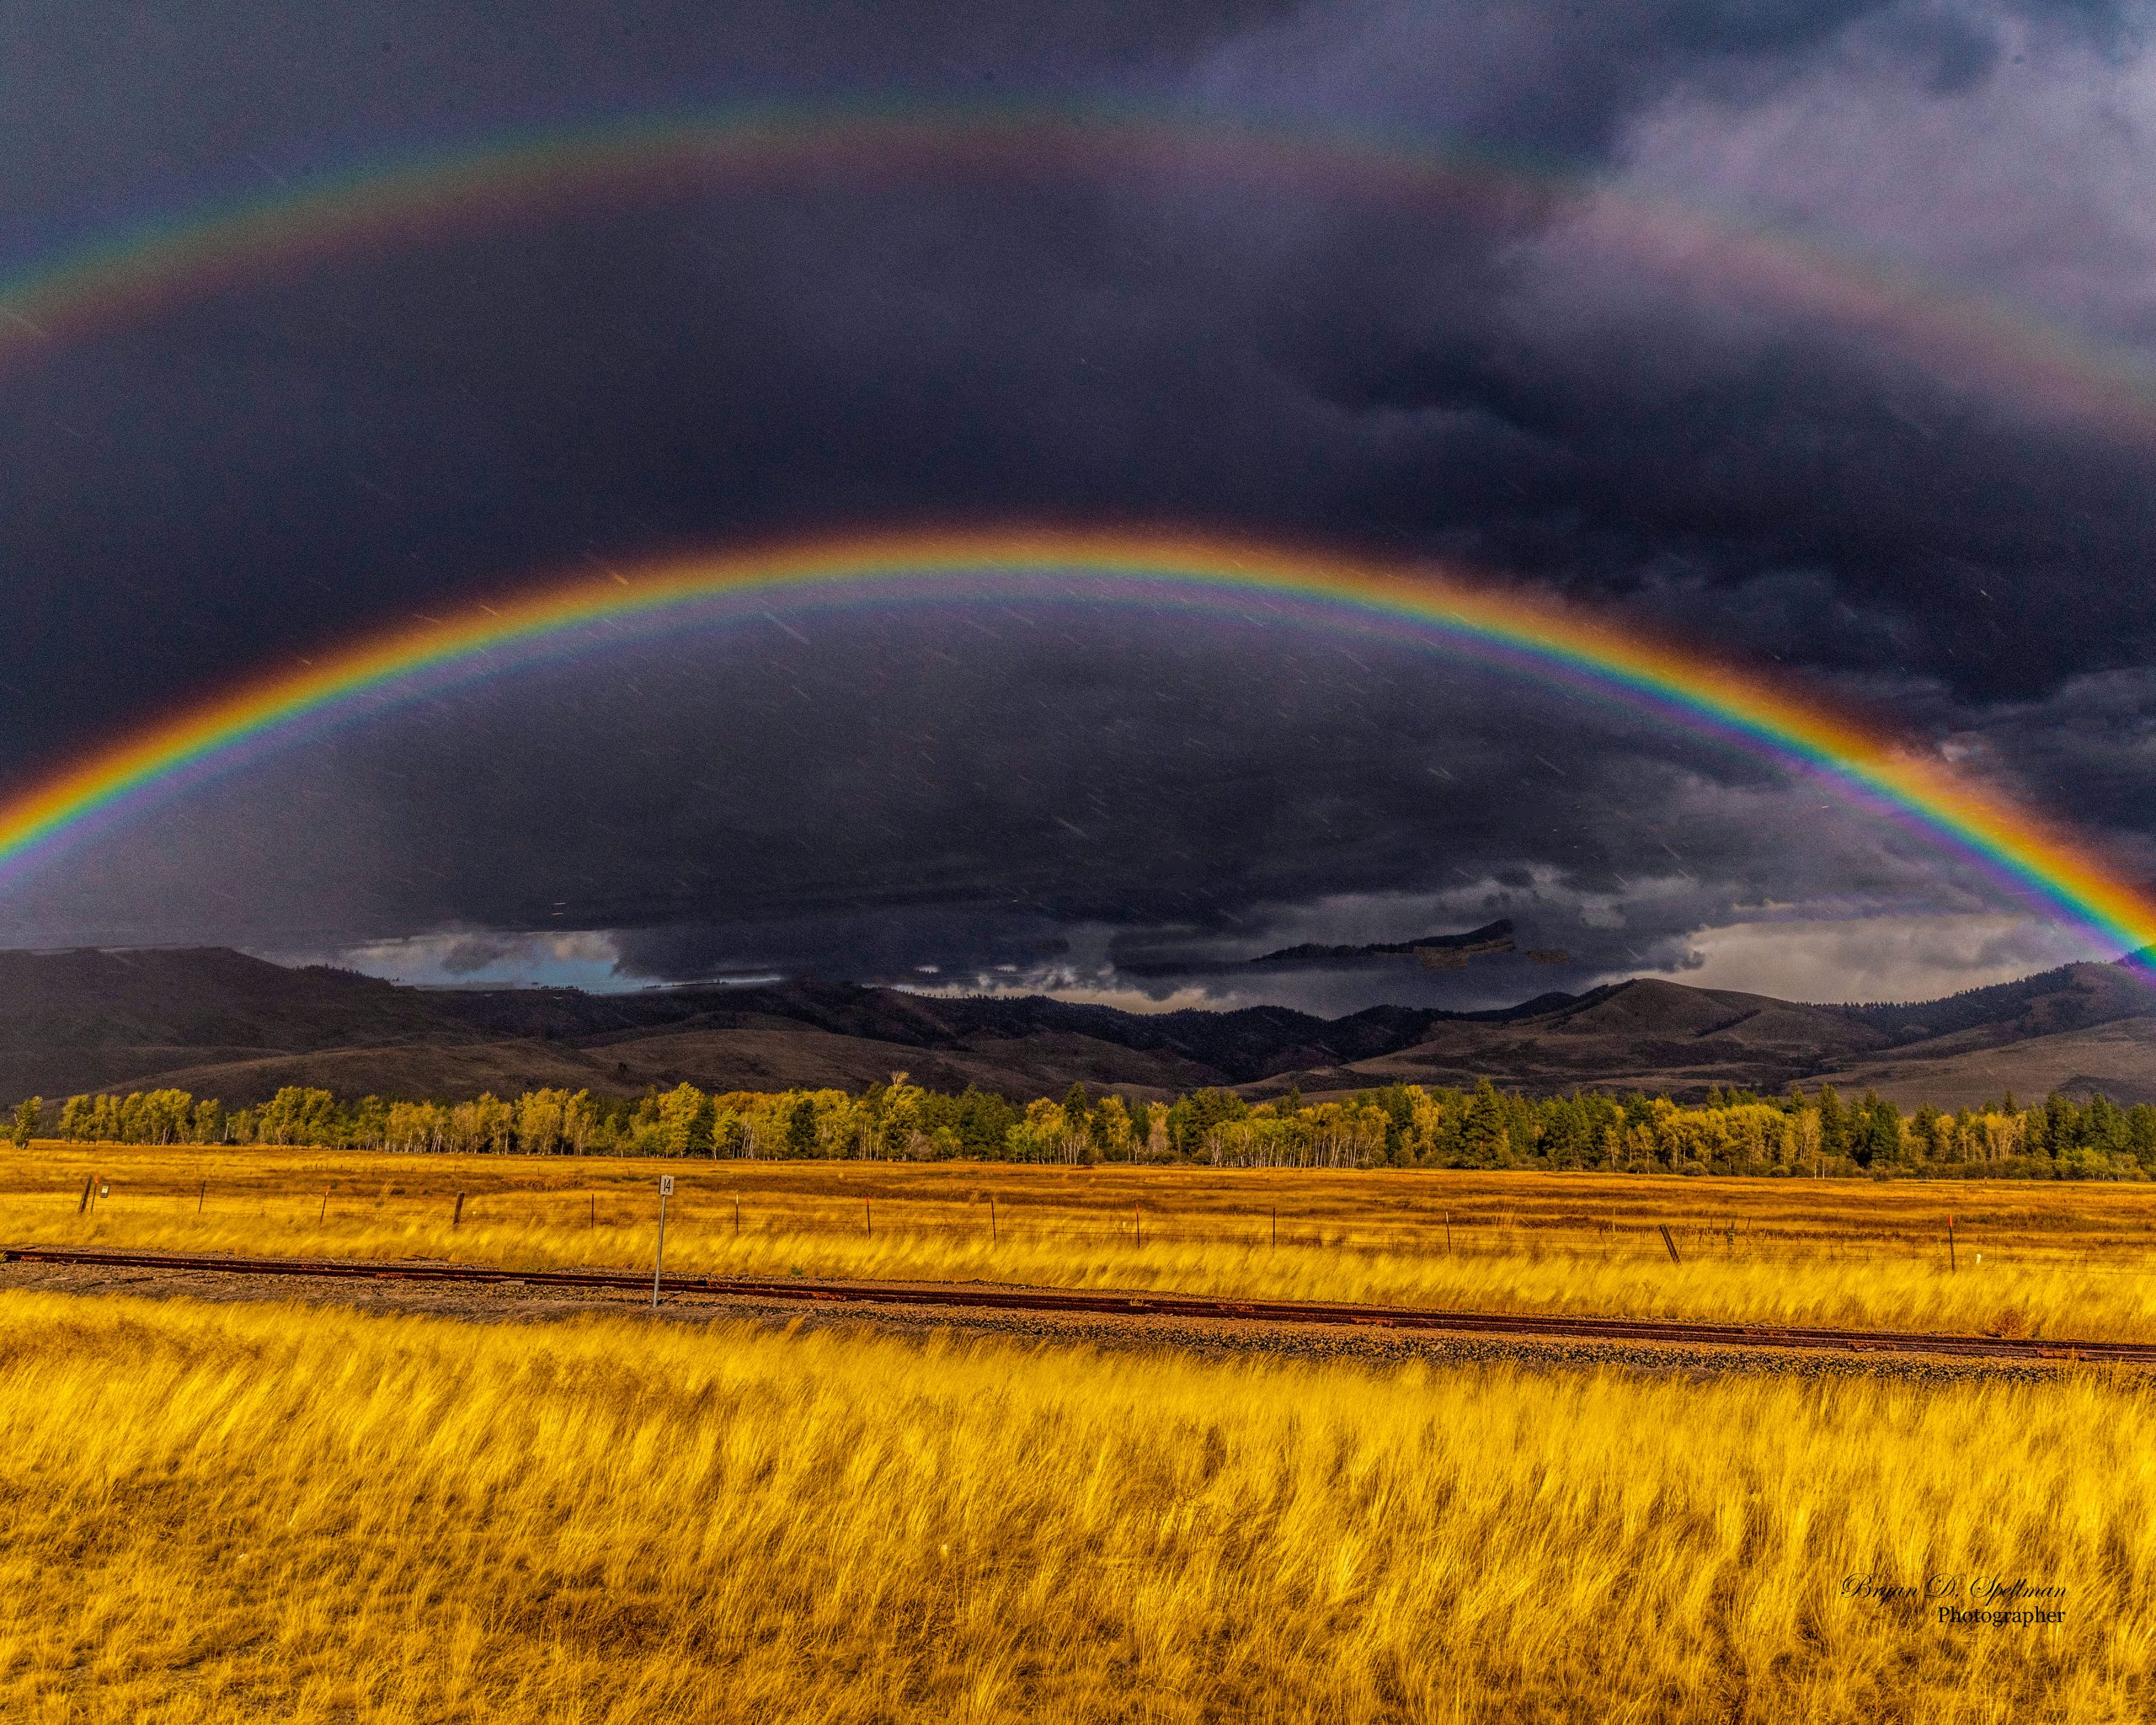 A double rainbow in a dark sky over a golden hayfield